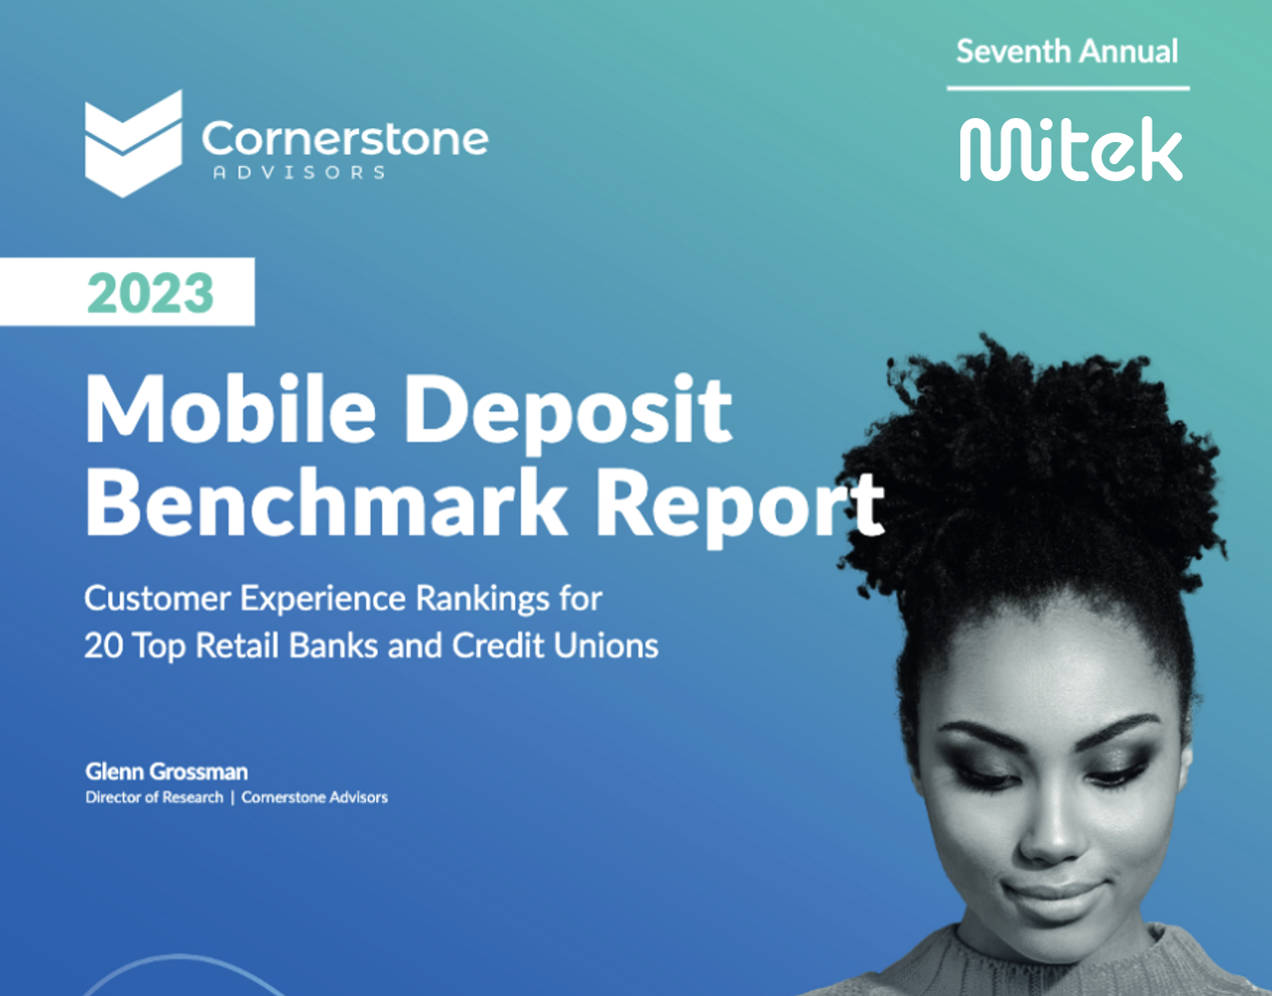 2023 Mitek Mobile Deposit Benchmark Report